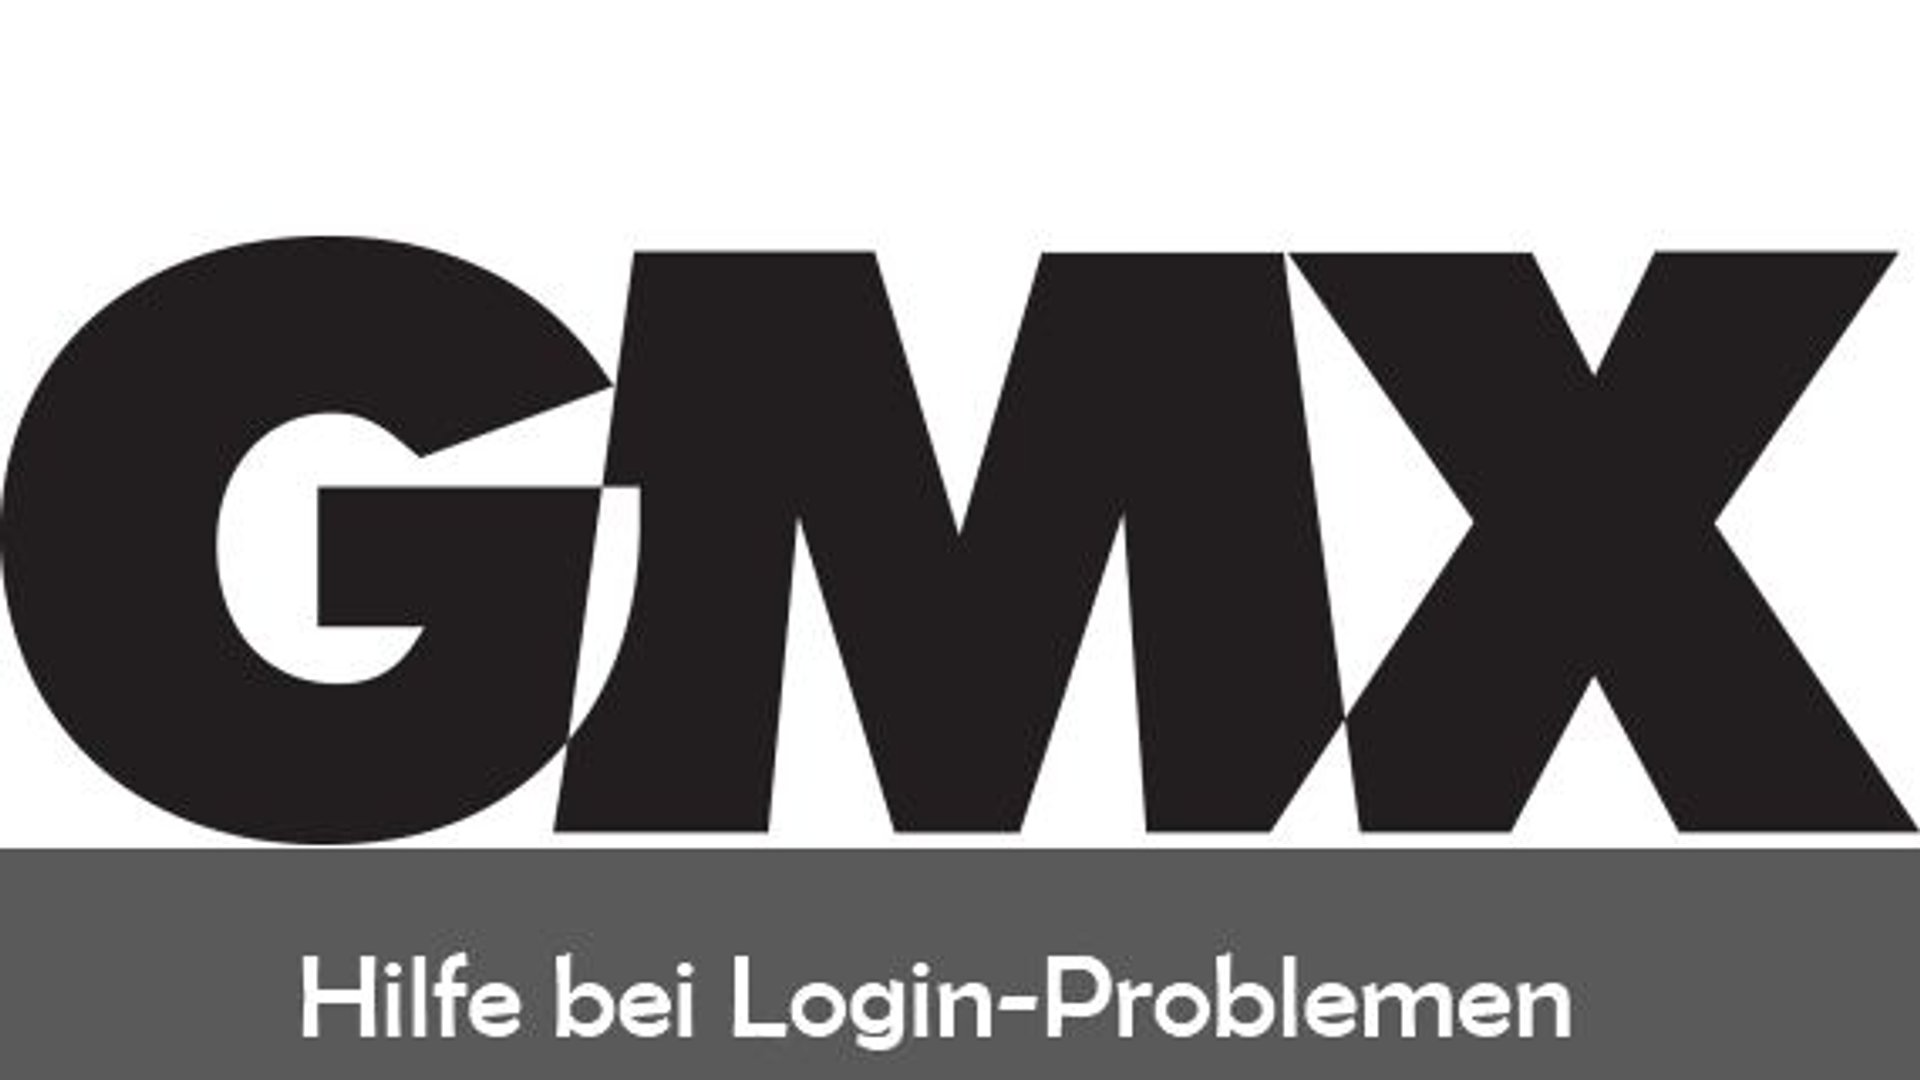 Gmx app login fehlgeschlagen